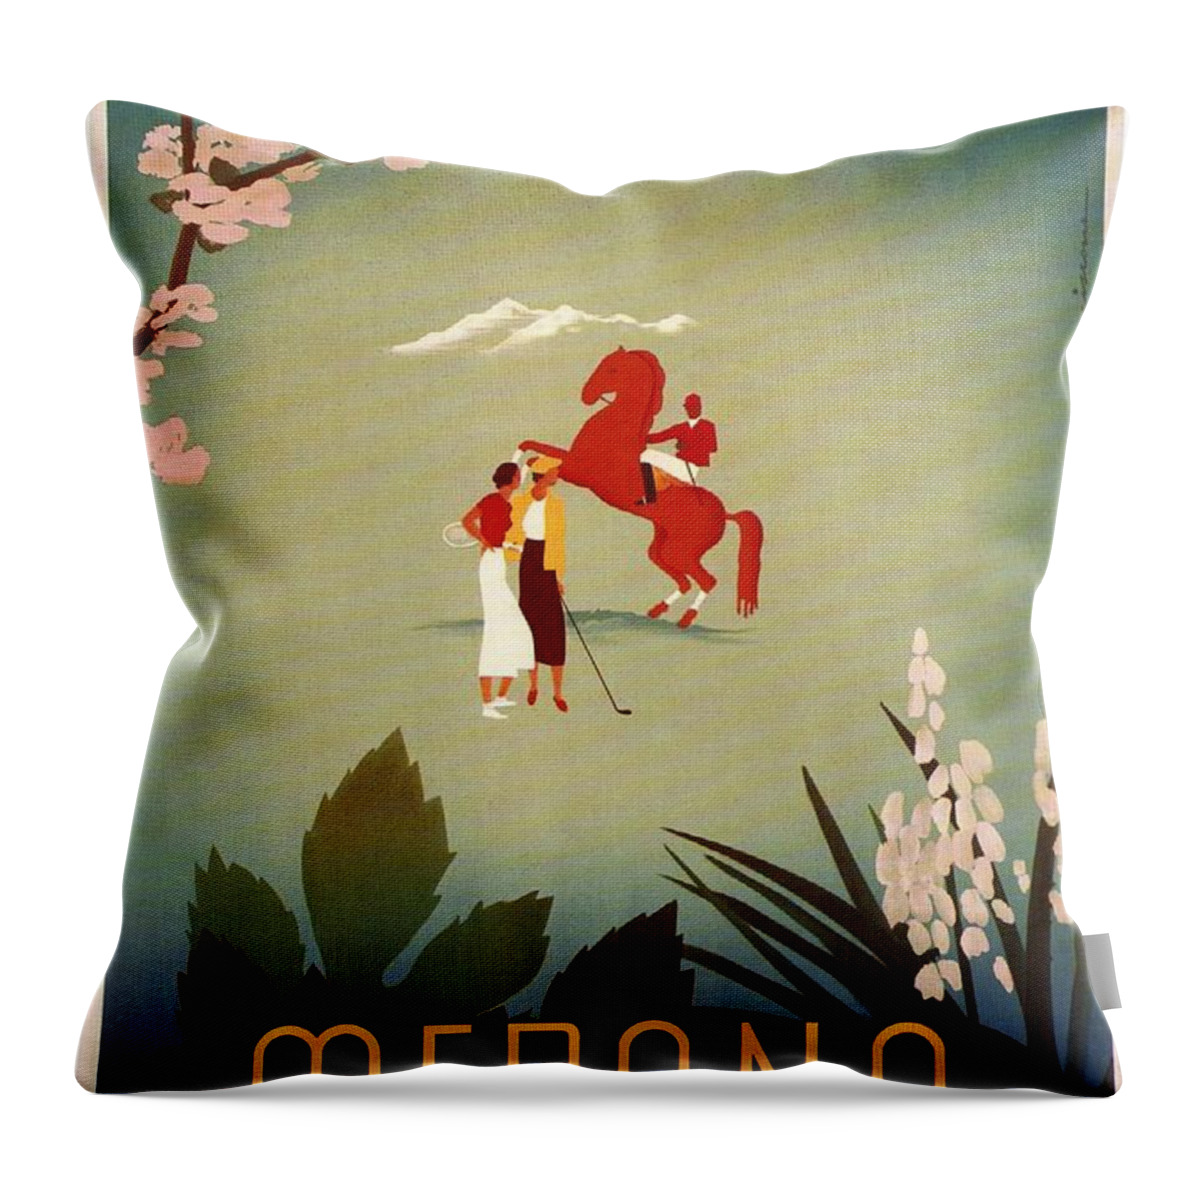 Merano Throw Pillow featuring the mixed media Merano - Italy - Retro travel Poster - Vintage Poster by Studio Grafiikka